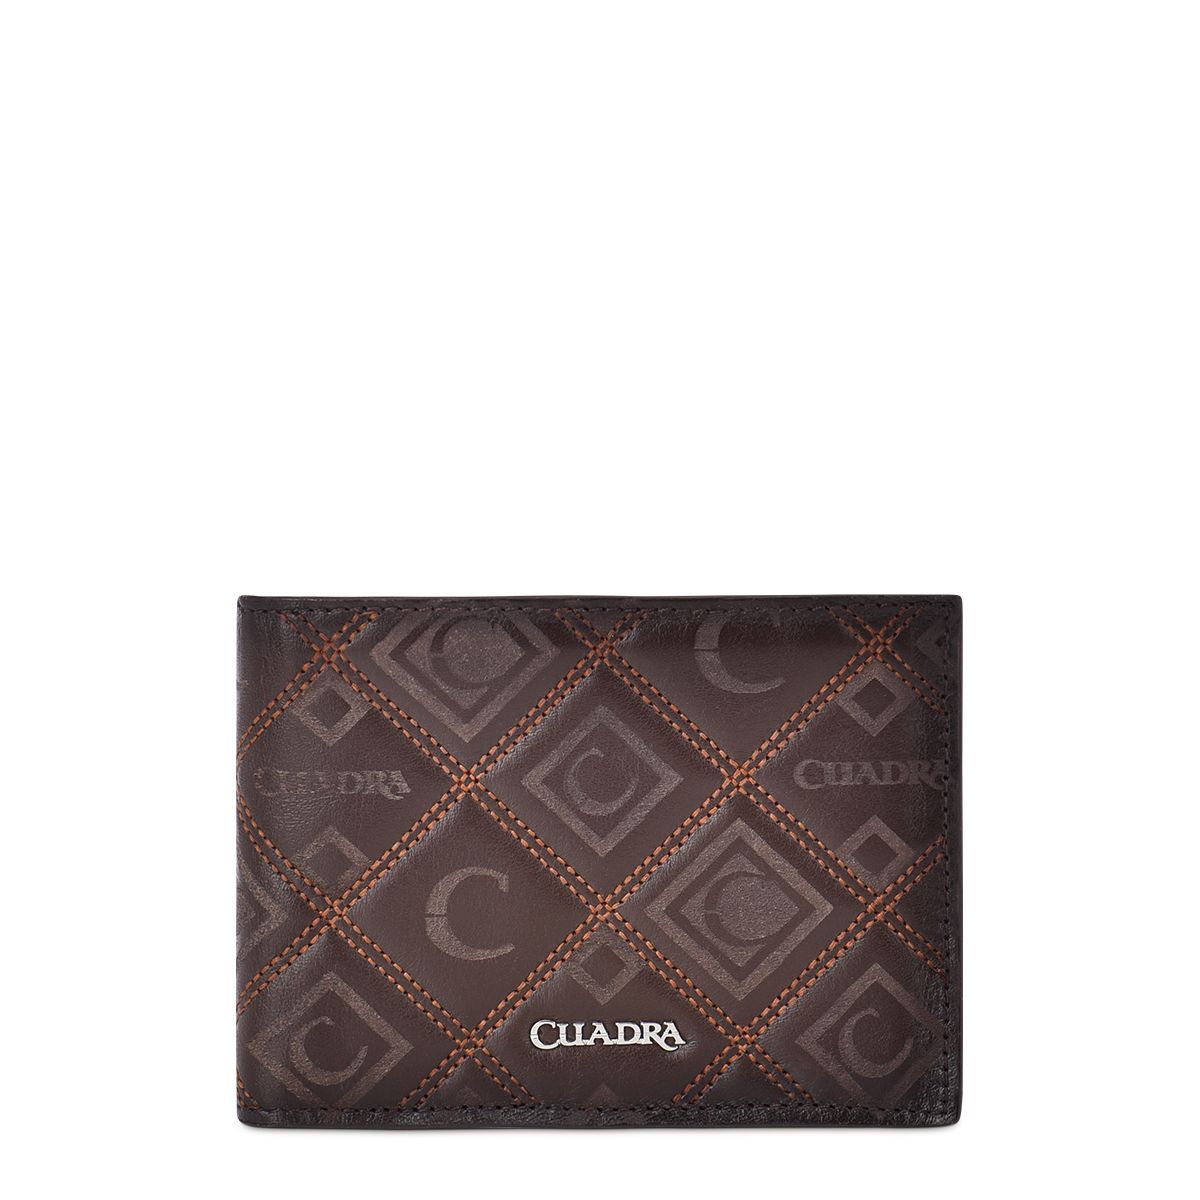 B3018RS - Cuadra brown casual fashion calfskin leather bi fold wallet for men-Kuet.us